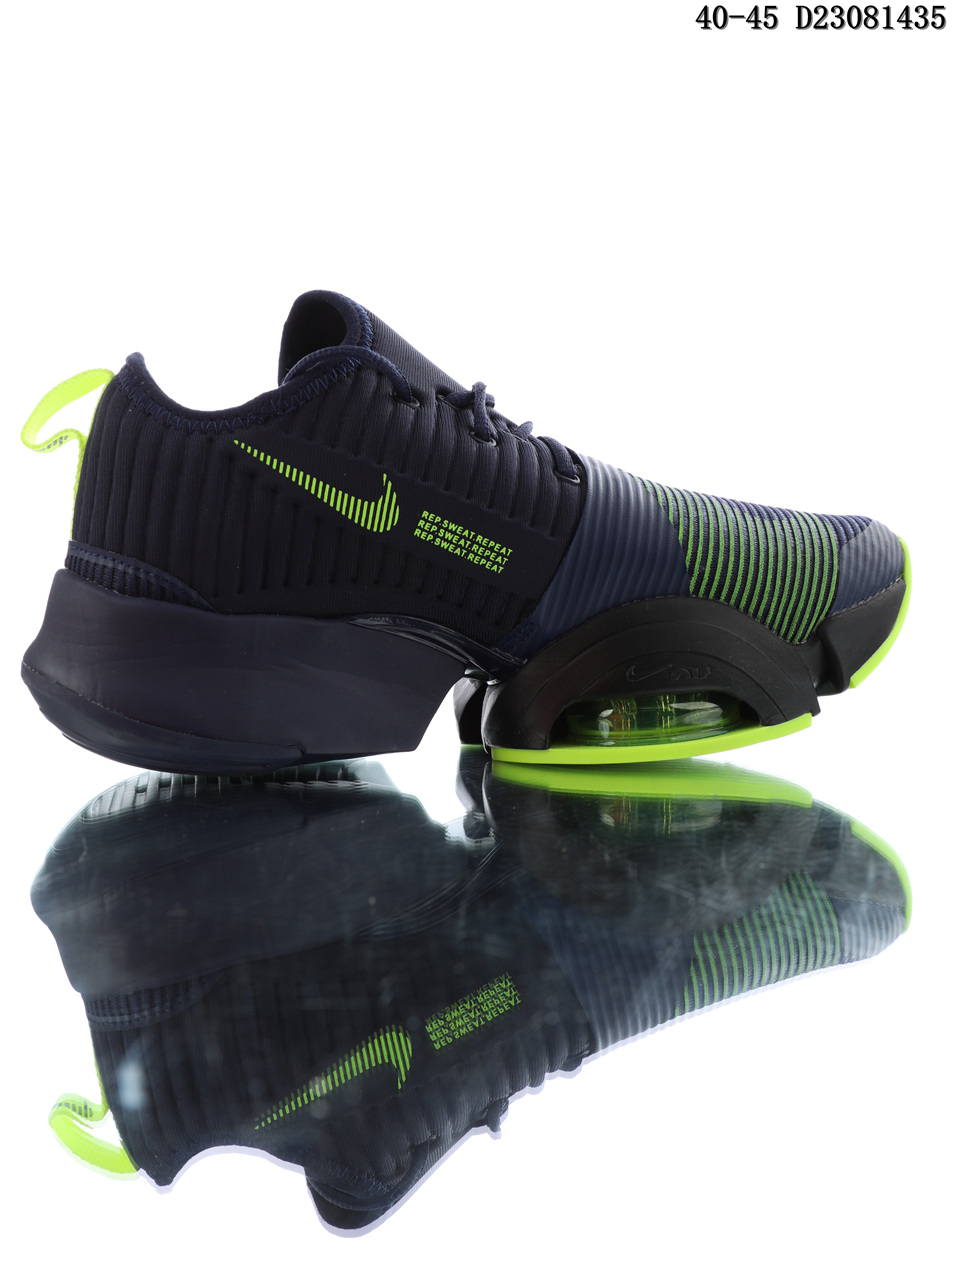 Nike Air Zoom Superrep black green jogging shoes Sell